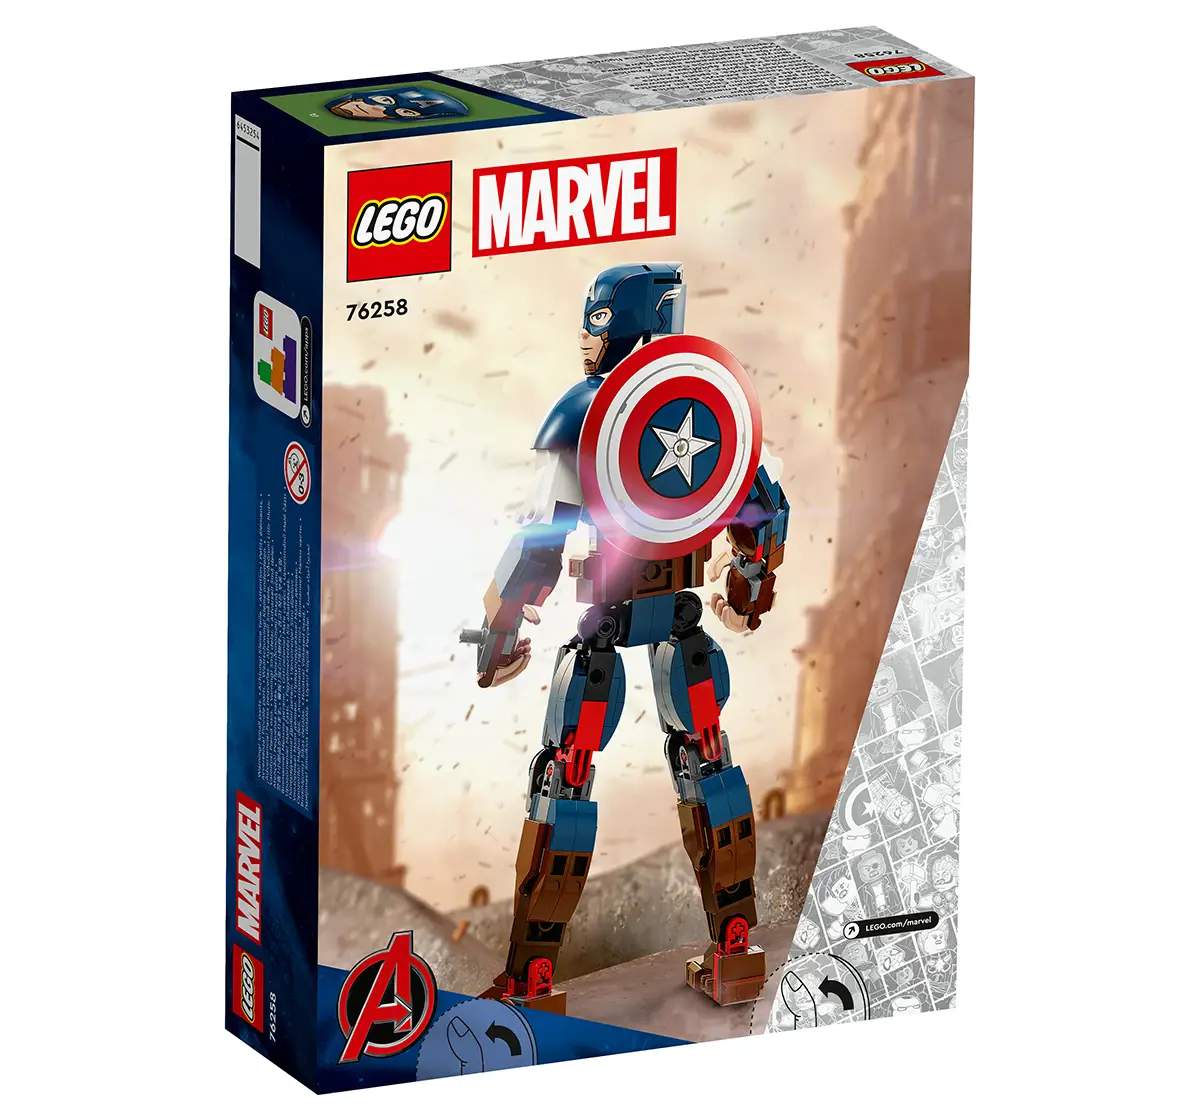 Lego Marvel Captain America Construction Figure 76258 Building Toy Set (310 Pieces), 8Y+